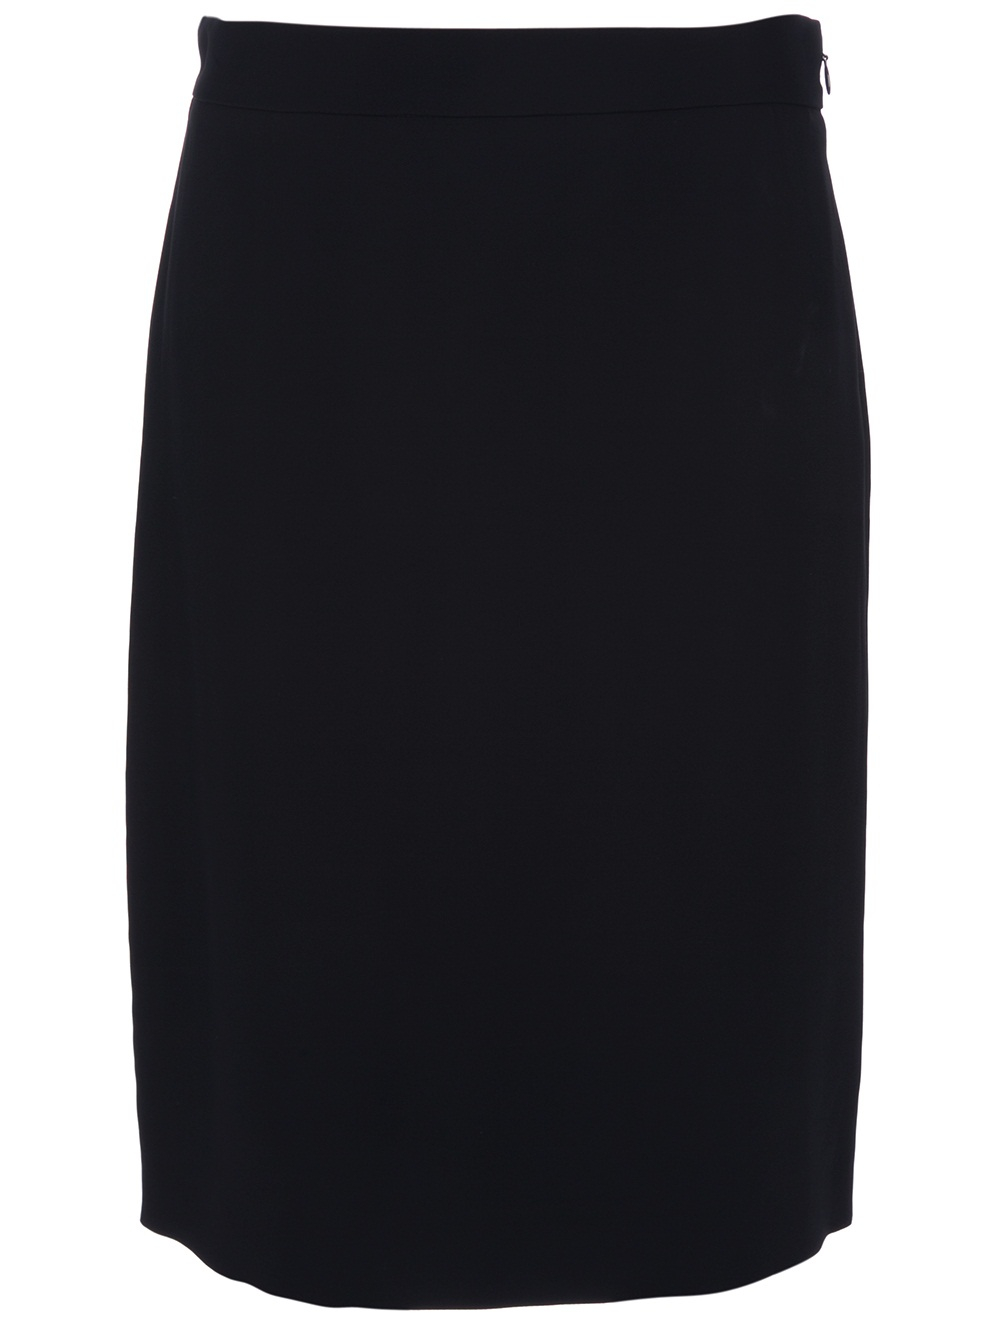 Lyst - Valentino roma Pencil Skirt in Black